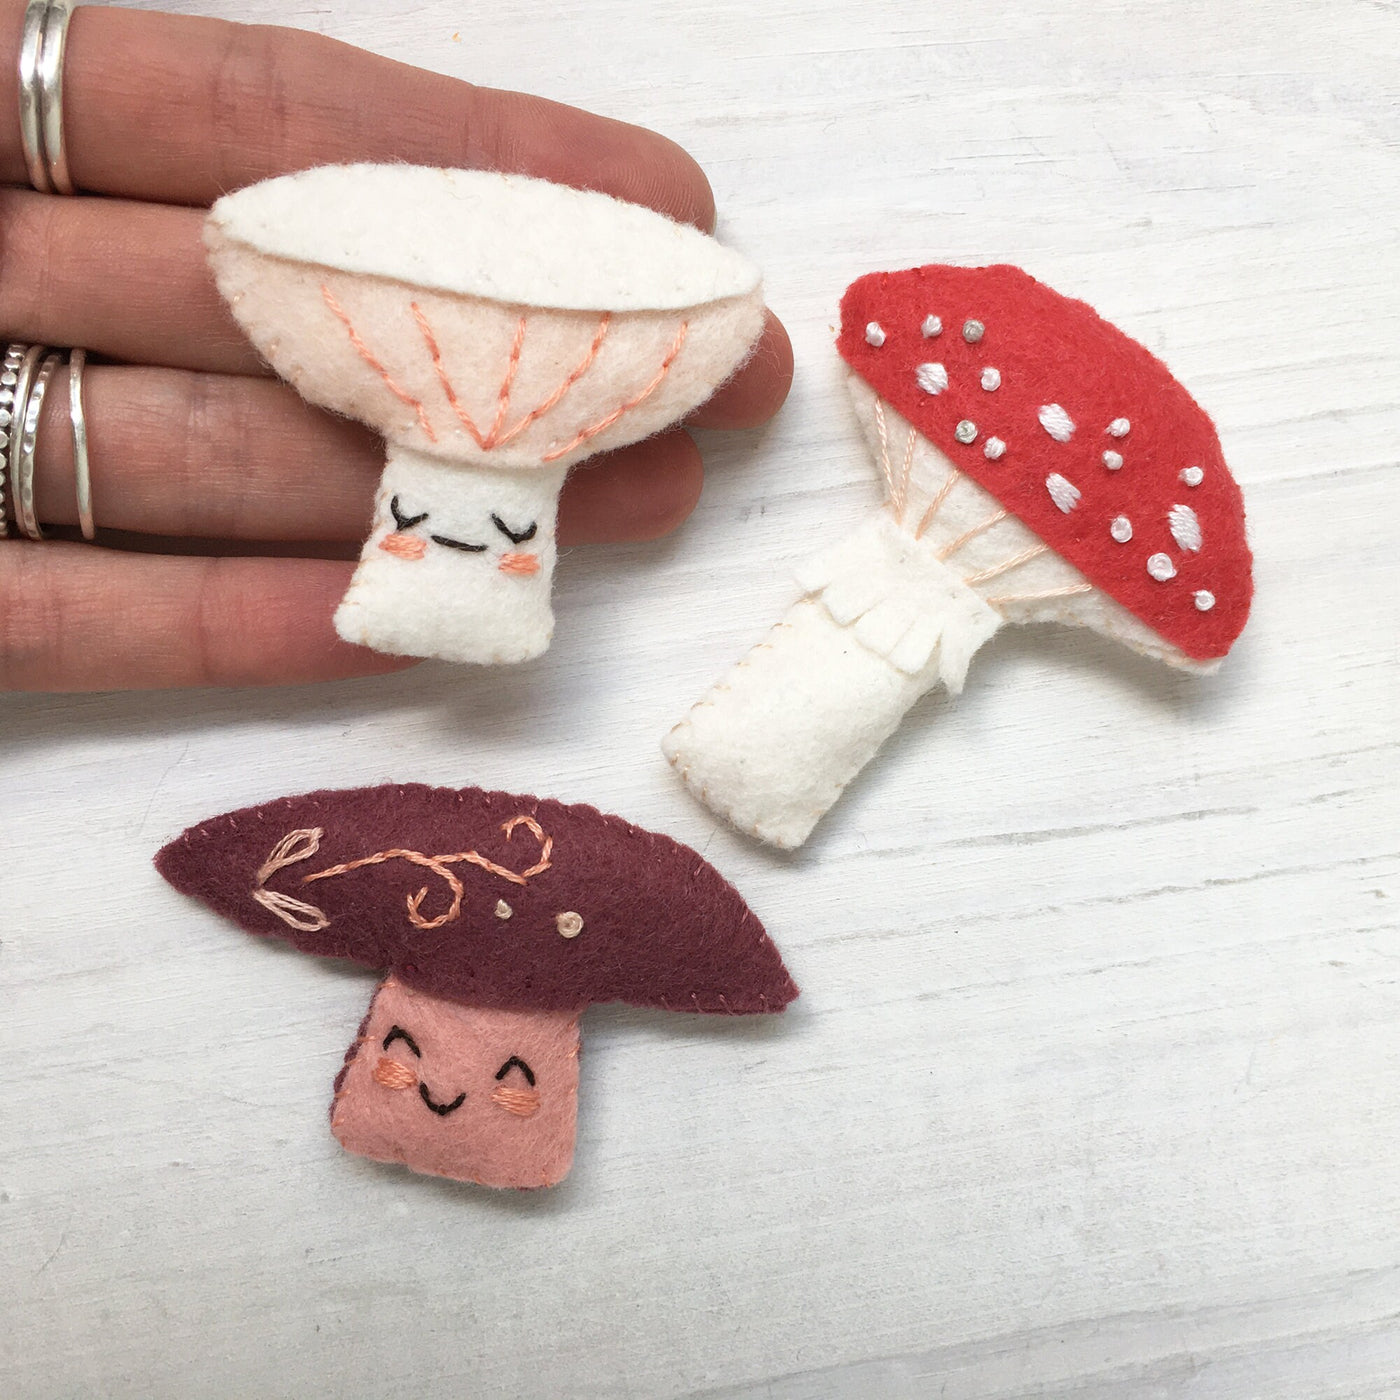 Felt Mushrooms plush sewing pattern